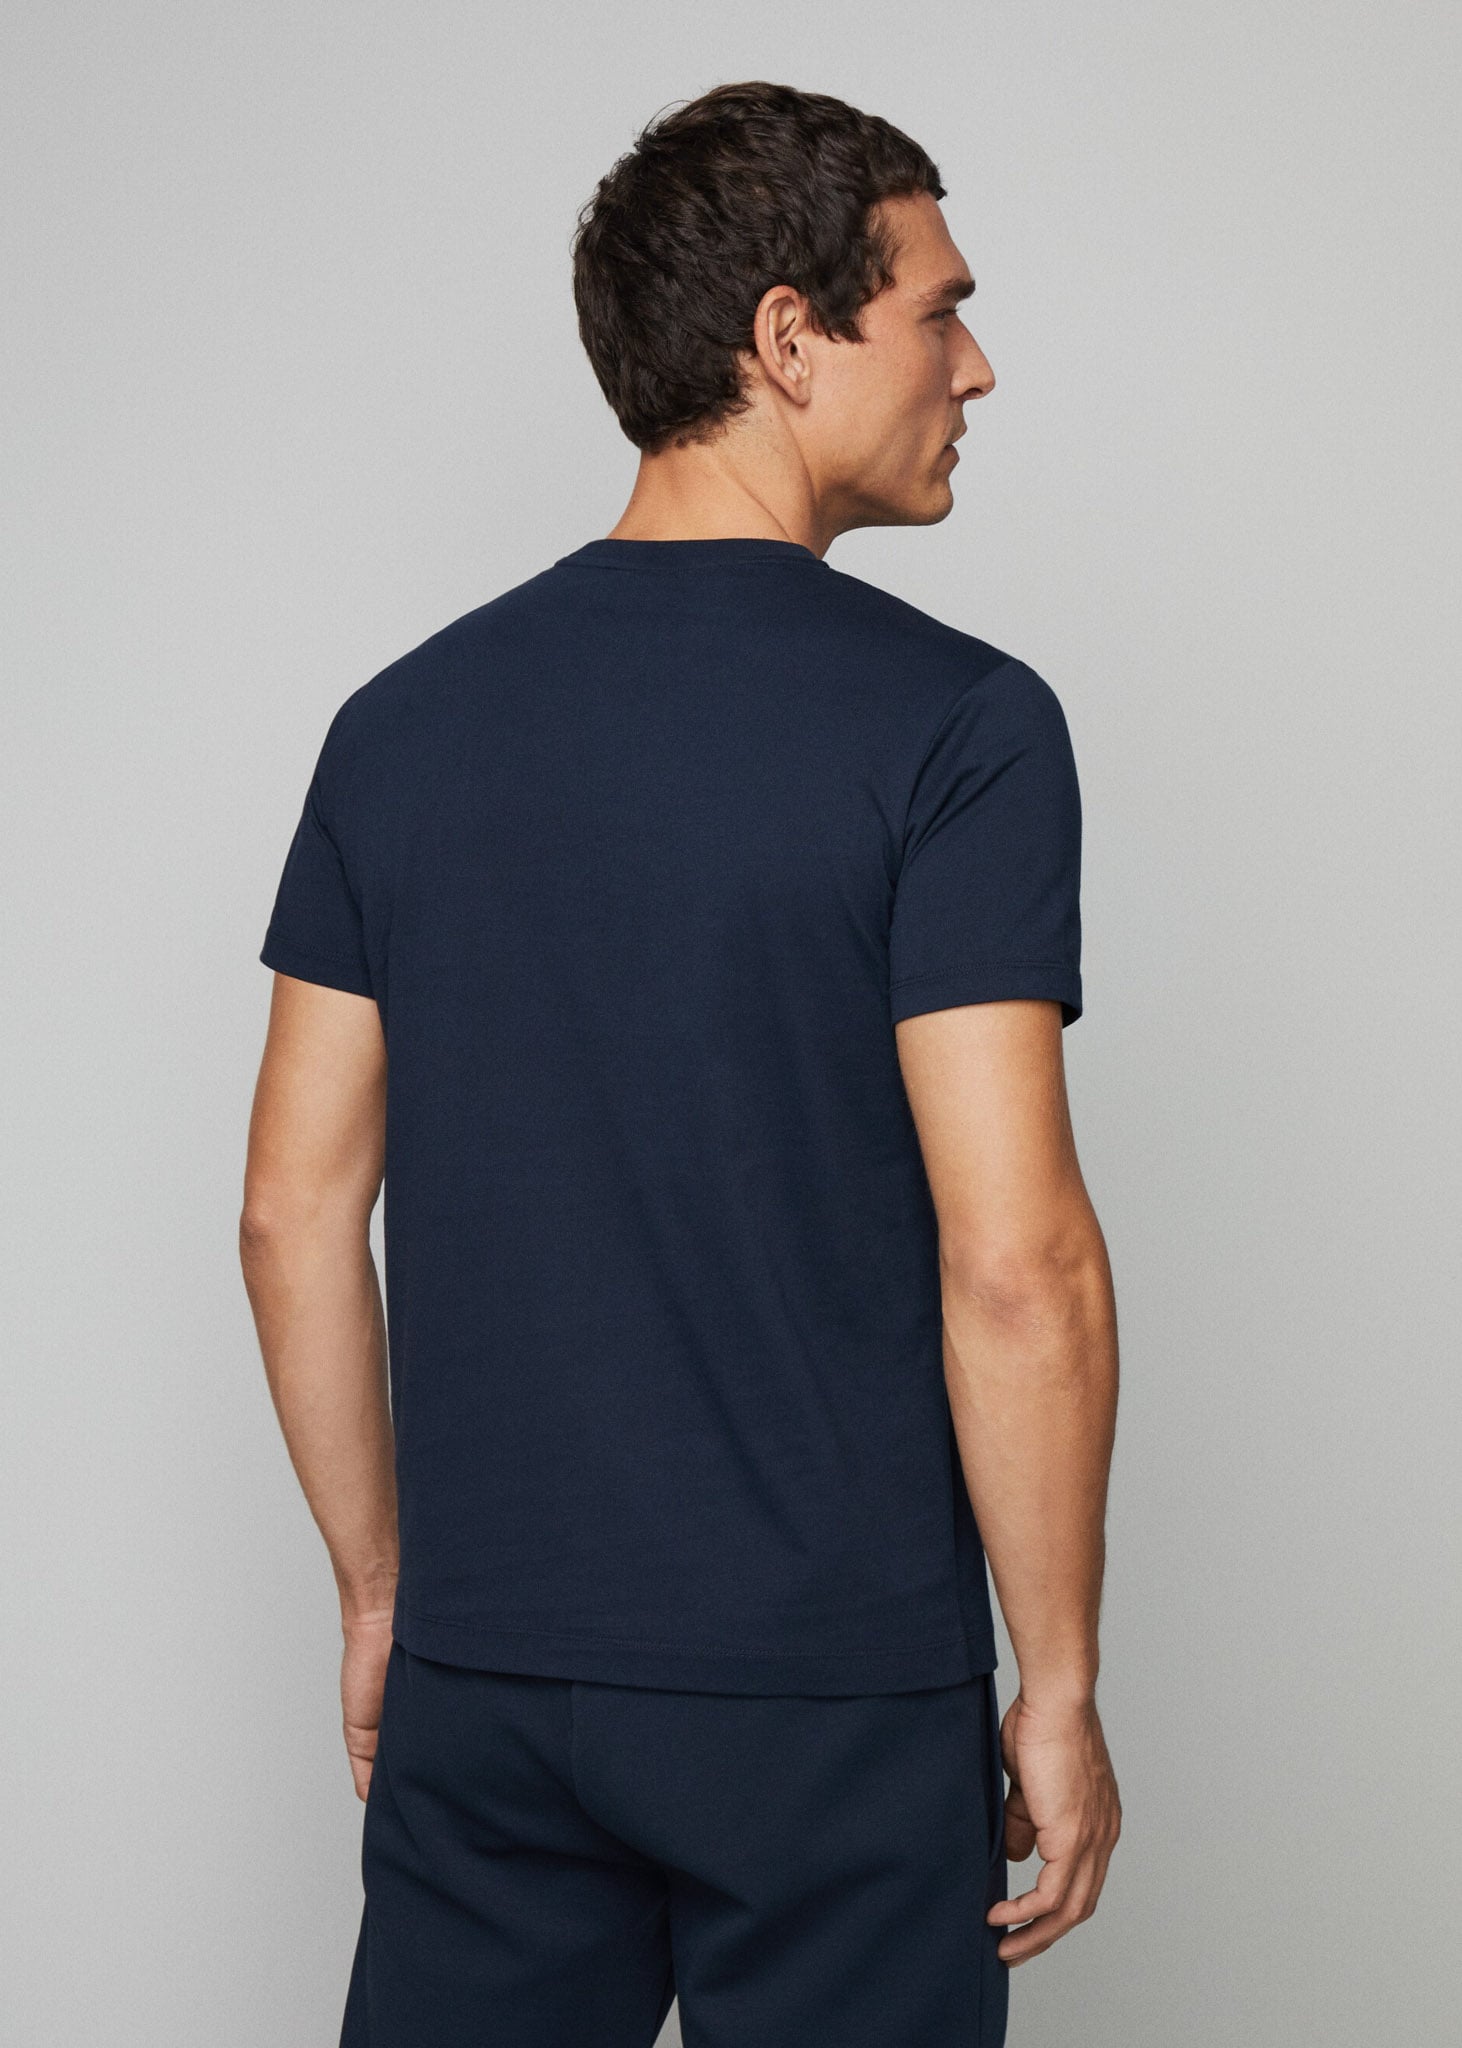 Hackett London T-shirts  Essential tee - navy grey 